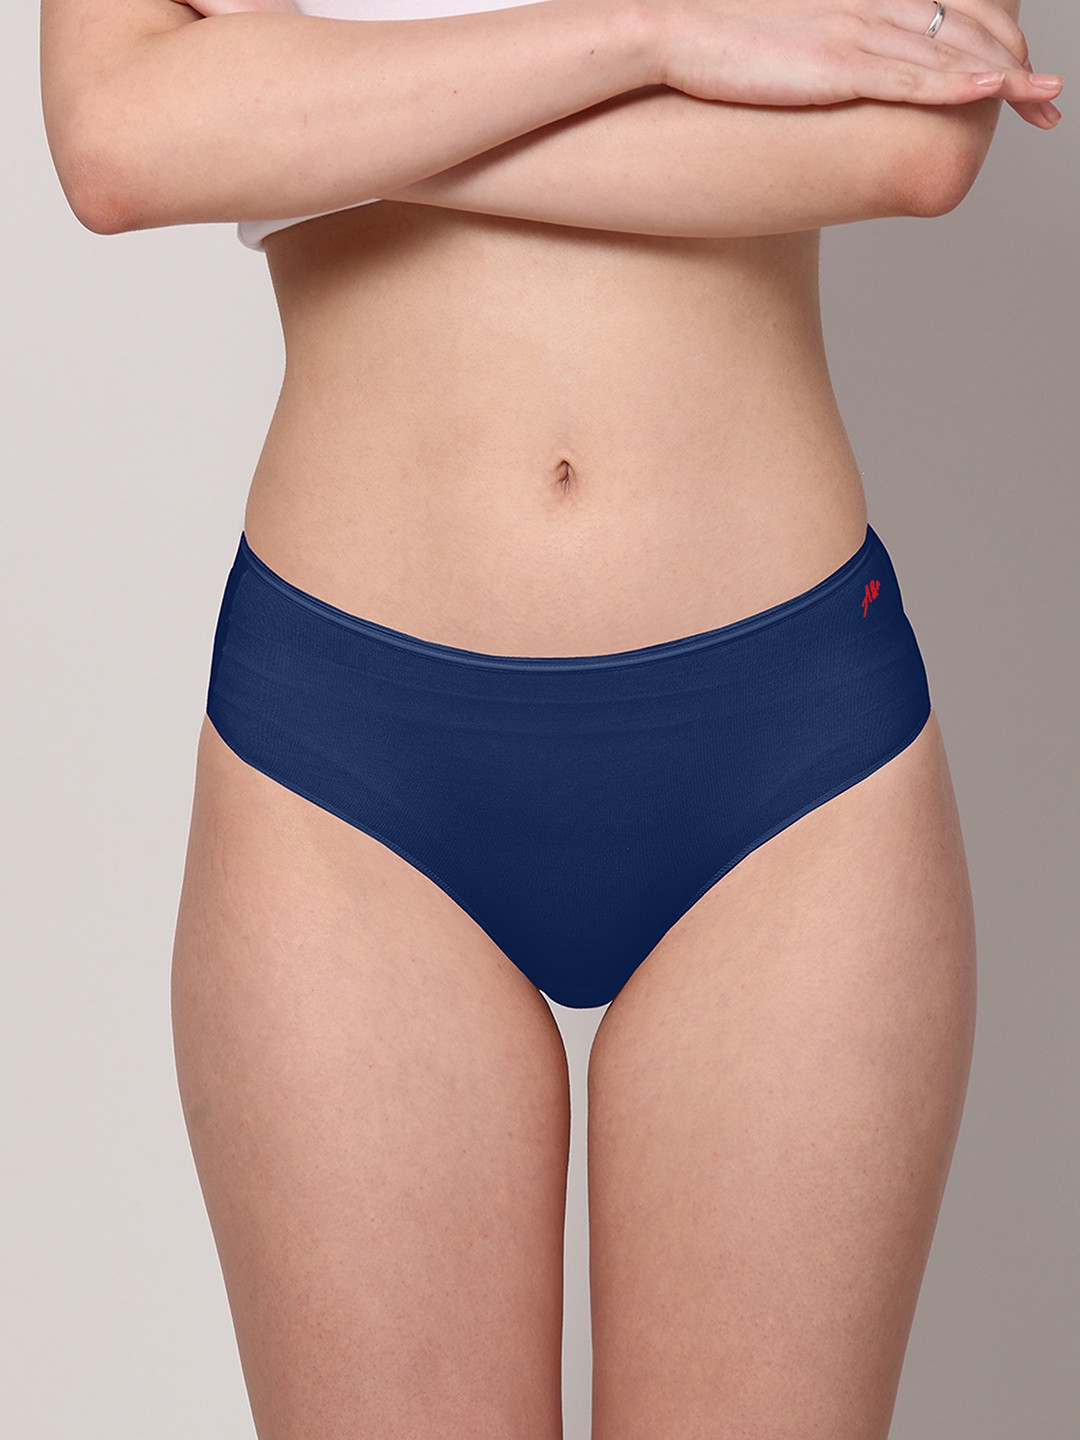 AshleyandAlvis | AshleyandAlvis Women's Panties Micro Modal, Anti Bacterial, Skinny Soft, Premium Hipster  -No Itching, Sweat Proof, Double In-seam Gusset 1